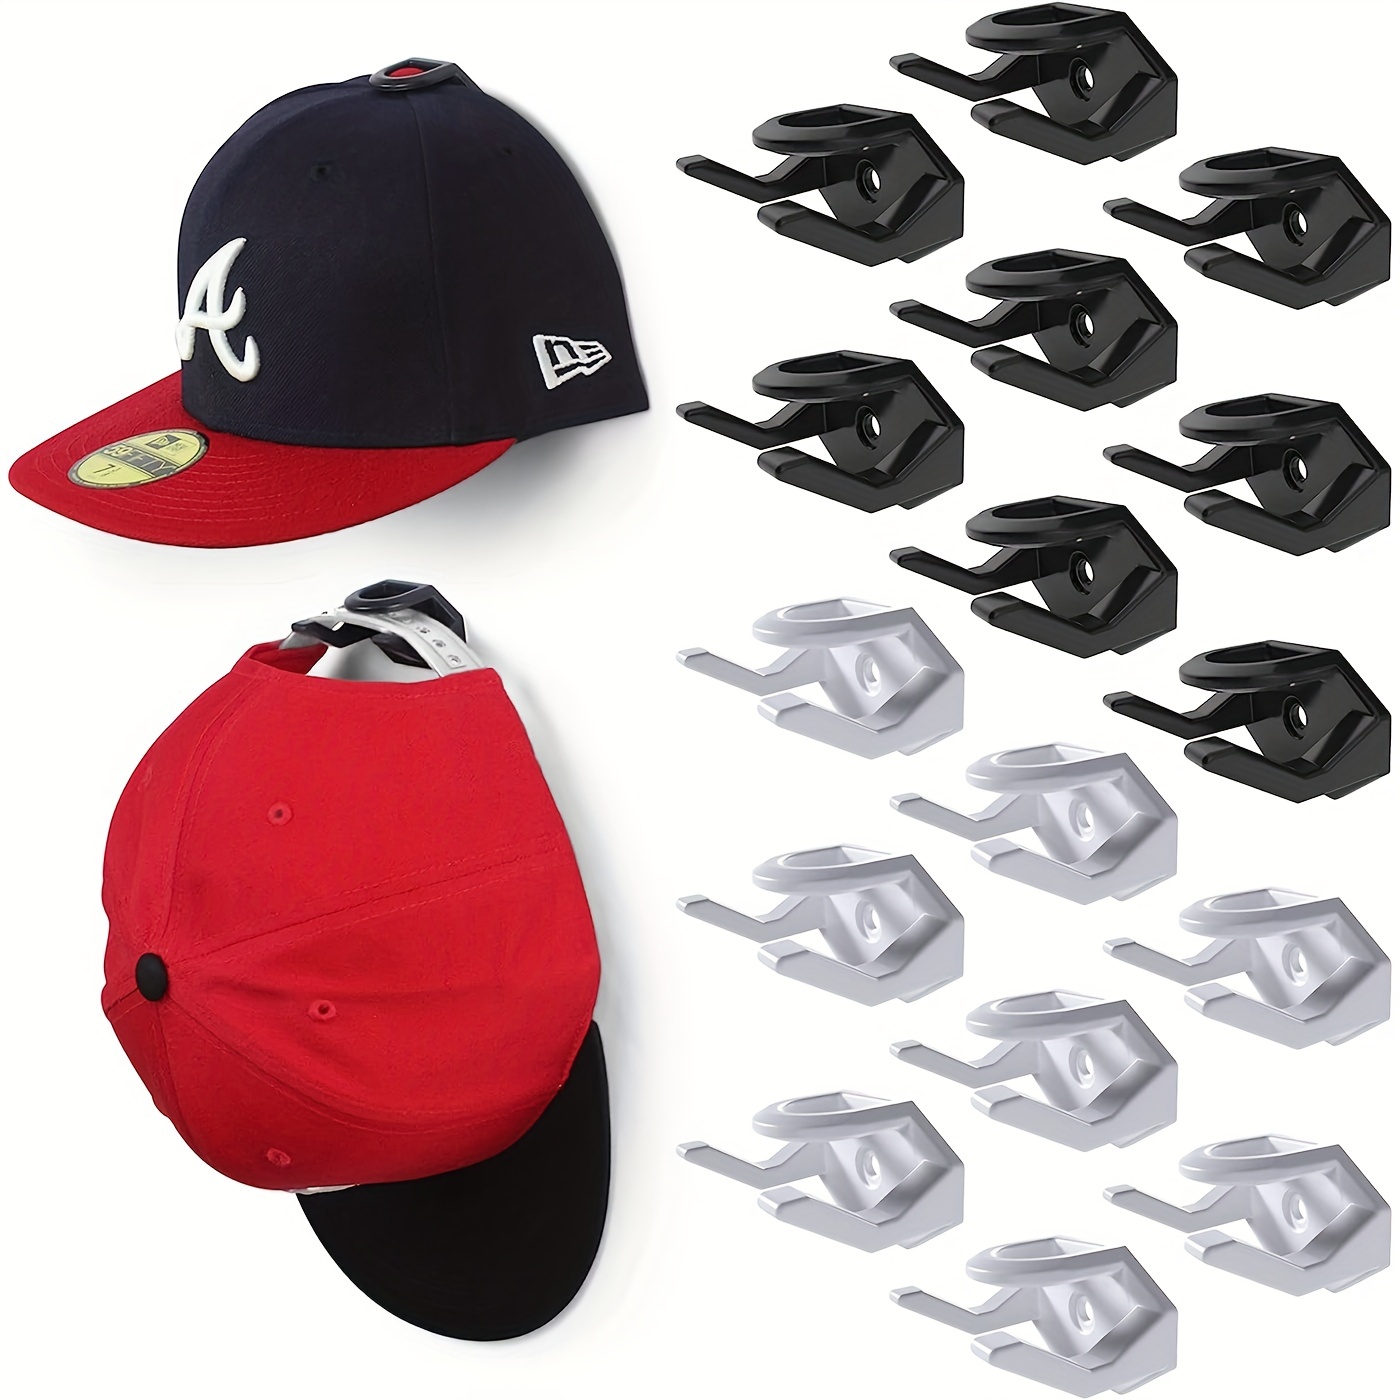 Hat Hanger White 10 Pack - Unique Hidden Design for Baseball, Cowboy, Fedoras Hats